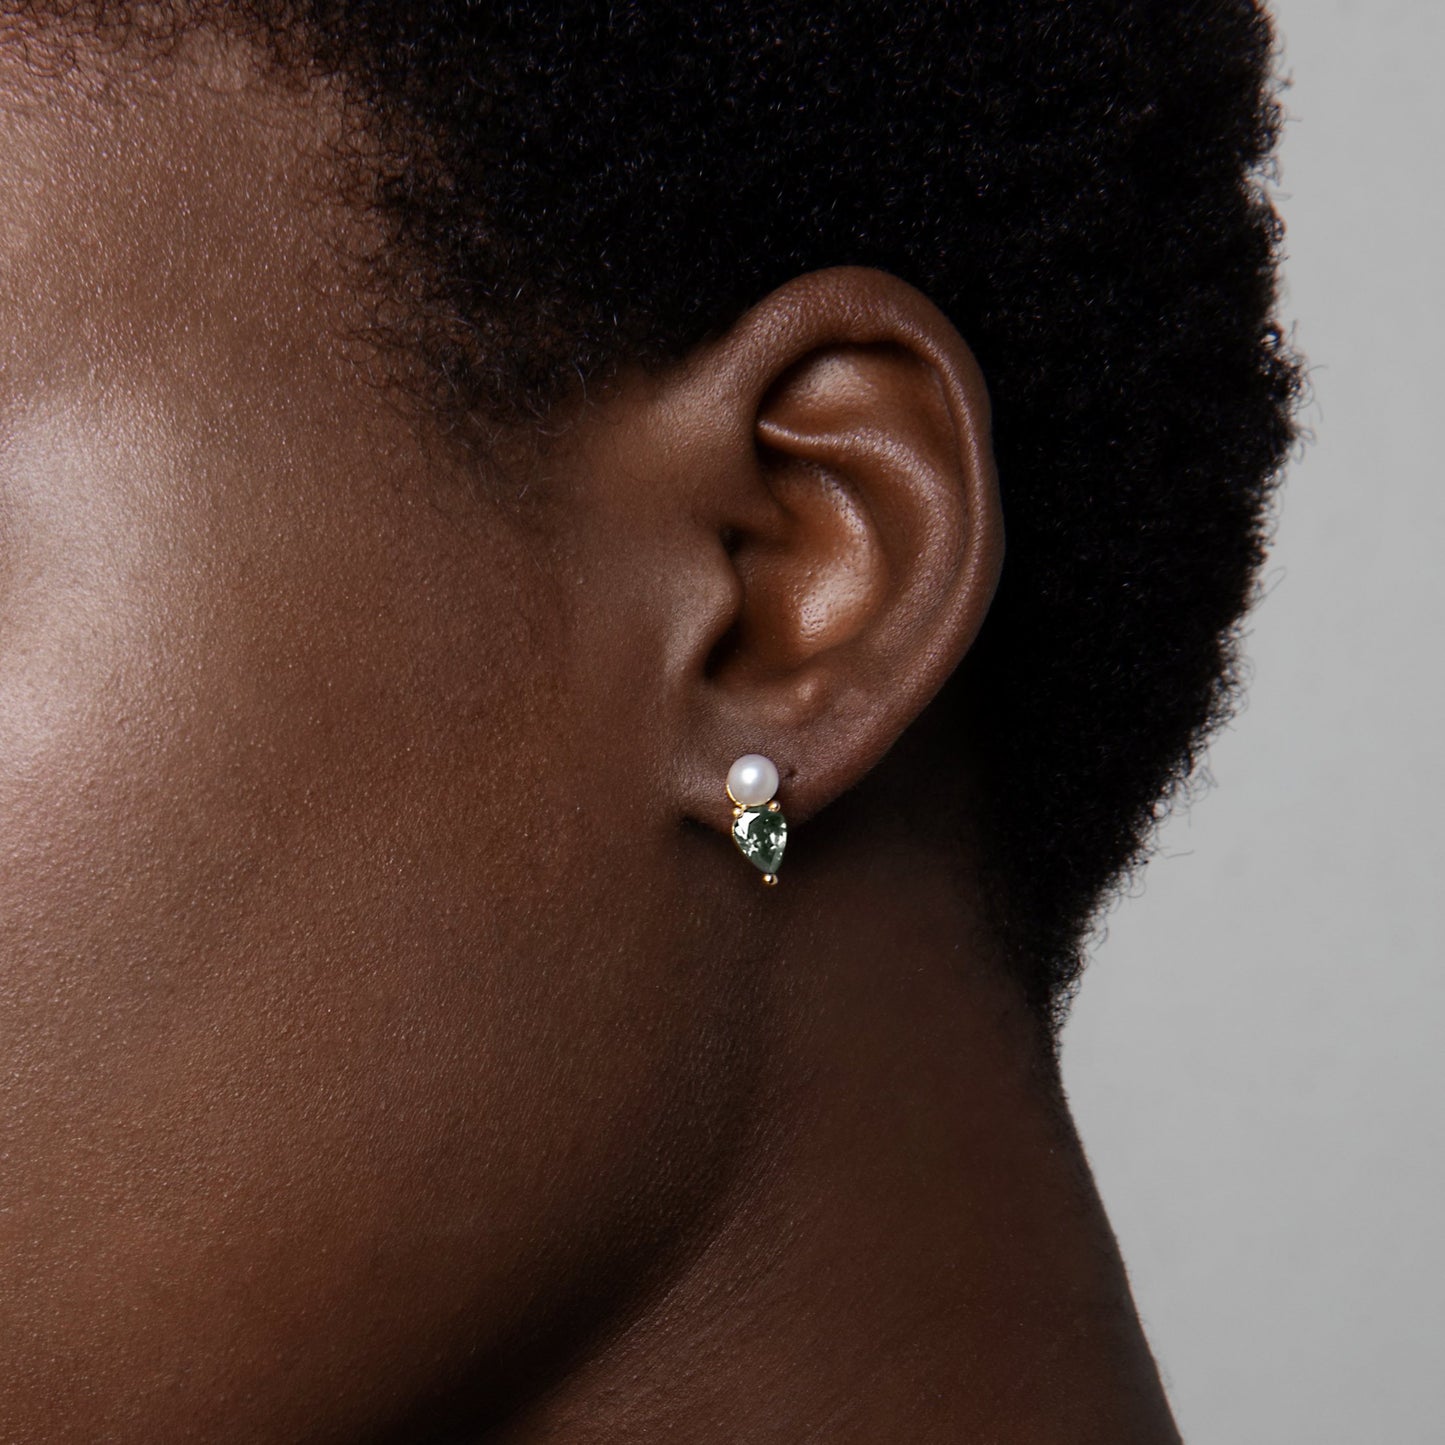 Jennifer wearing our Mini Pearl and Light Green Tourmaline Earring Pendant by McFarlane Fine Jewellery